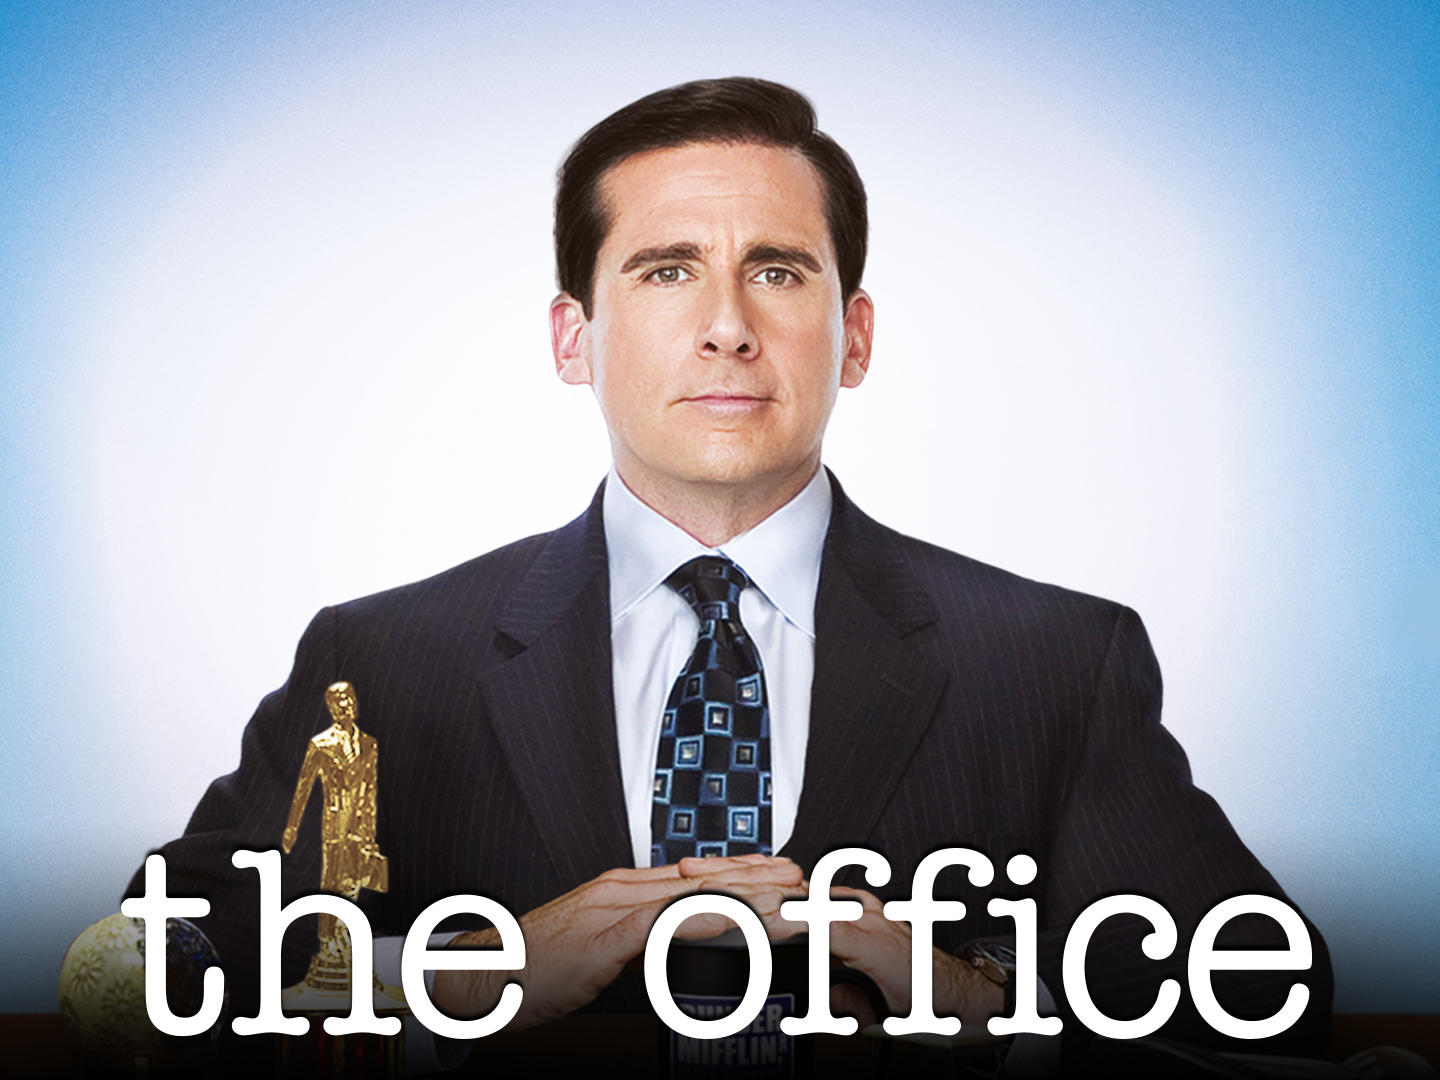 the office season 1 episode 1 full free